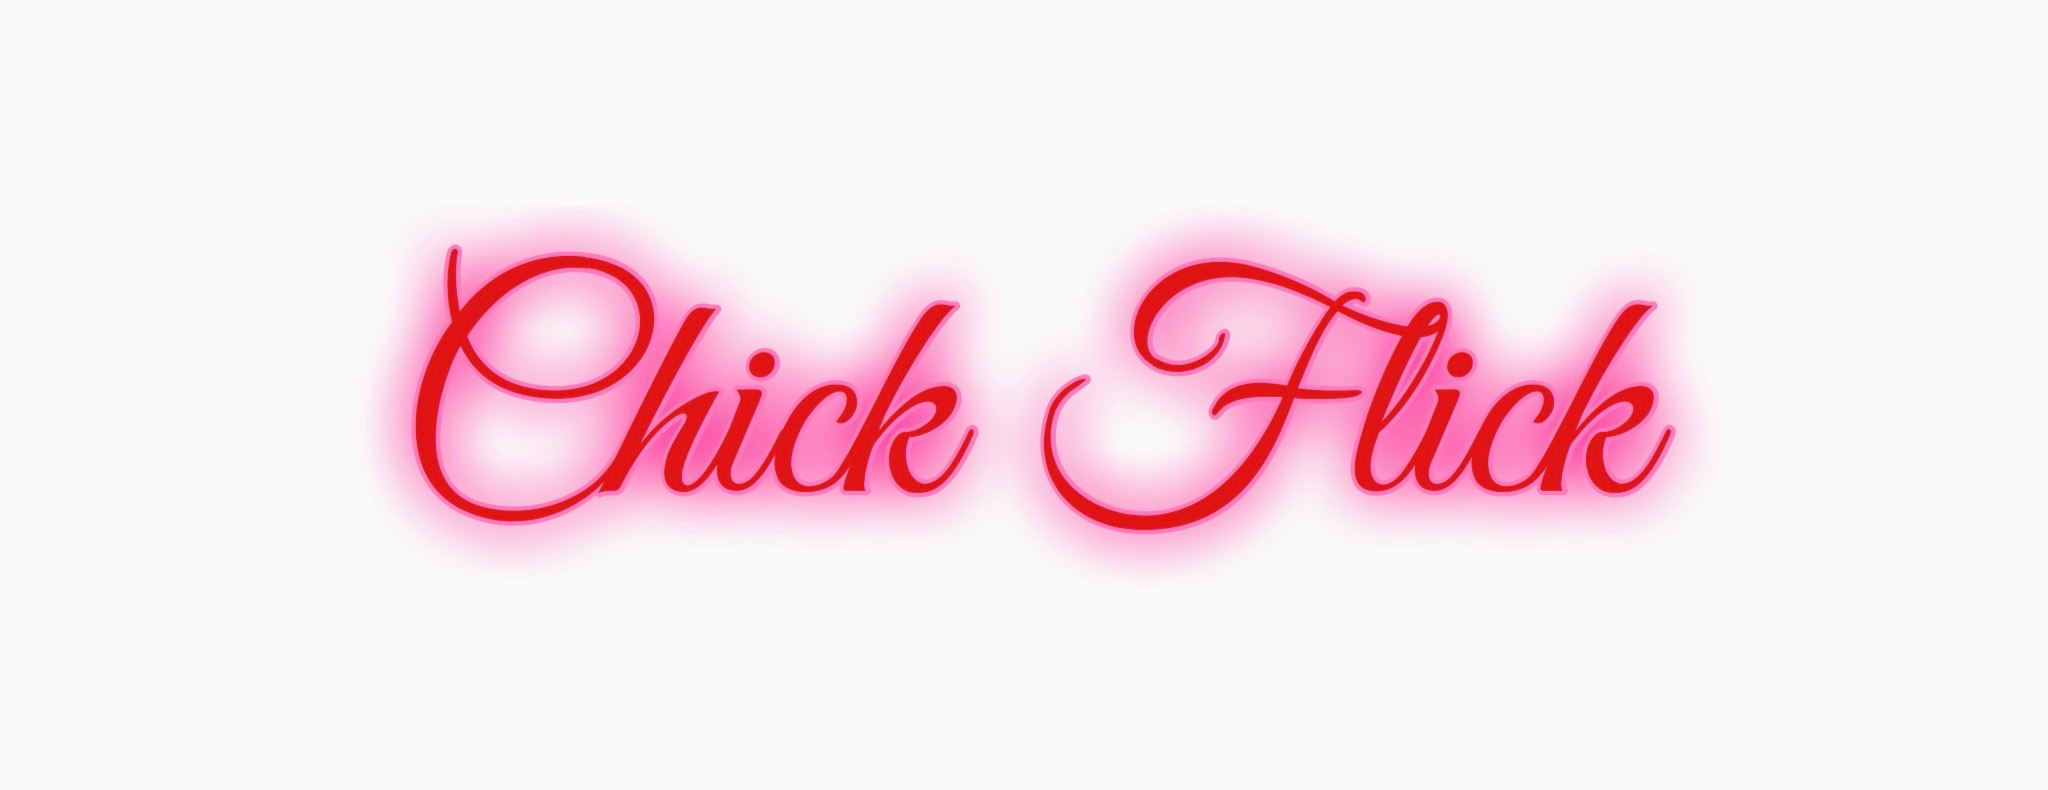 chickflick